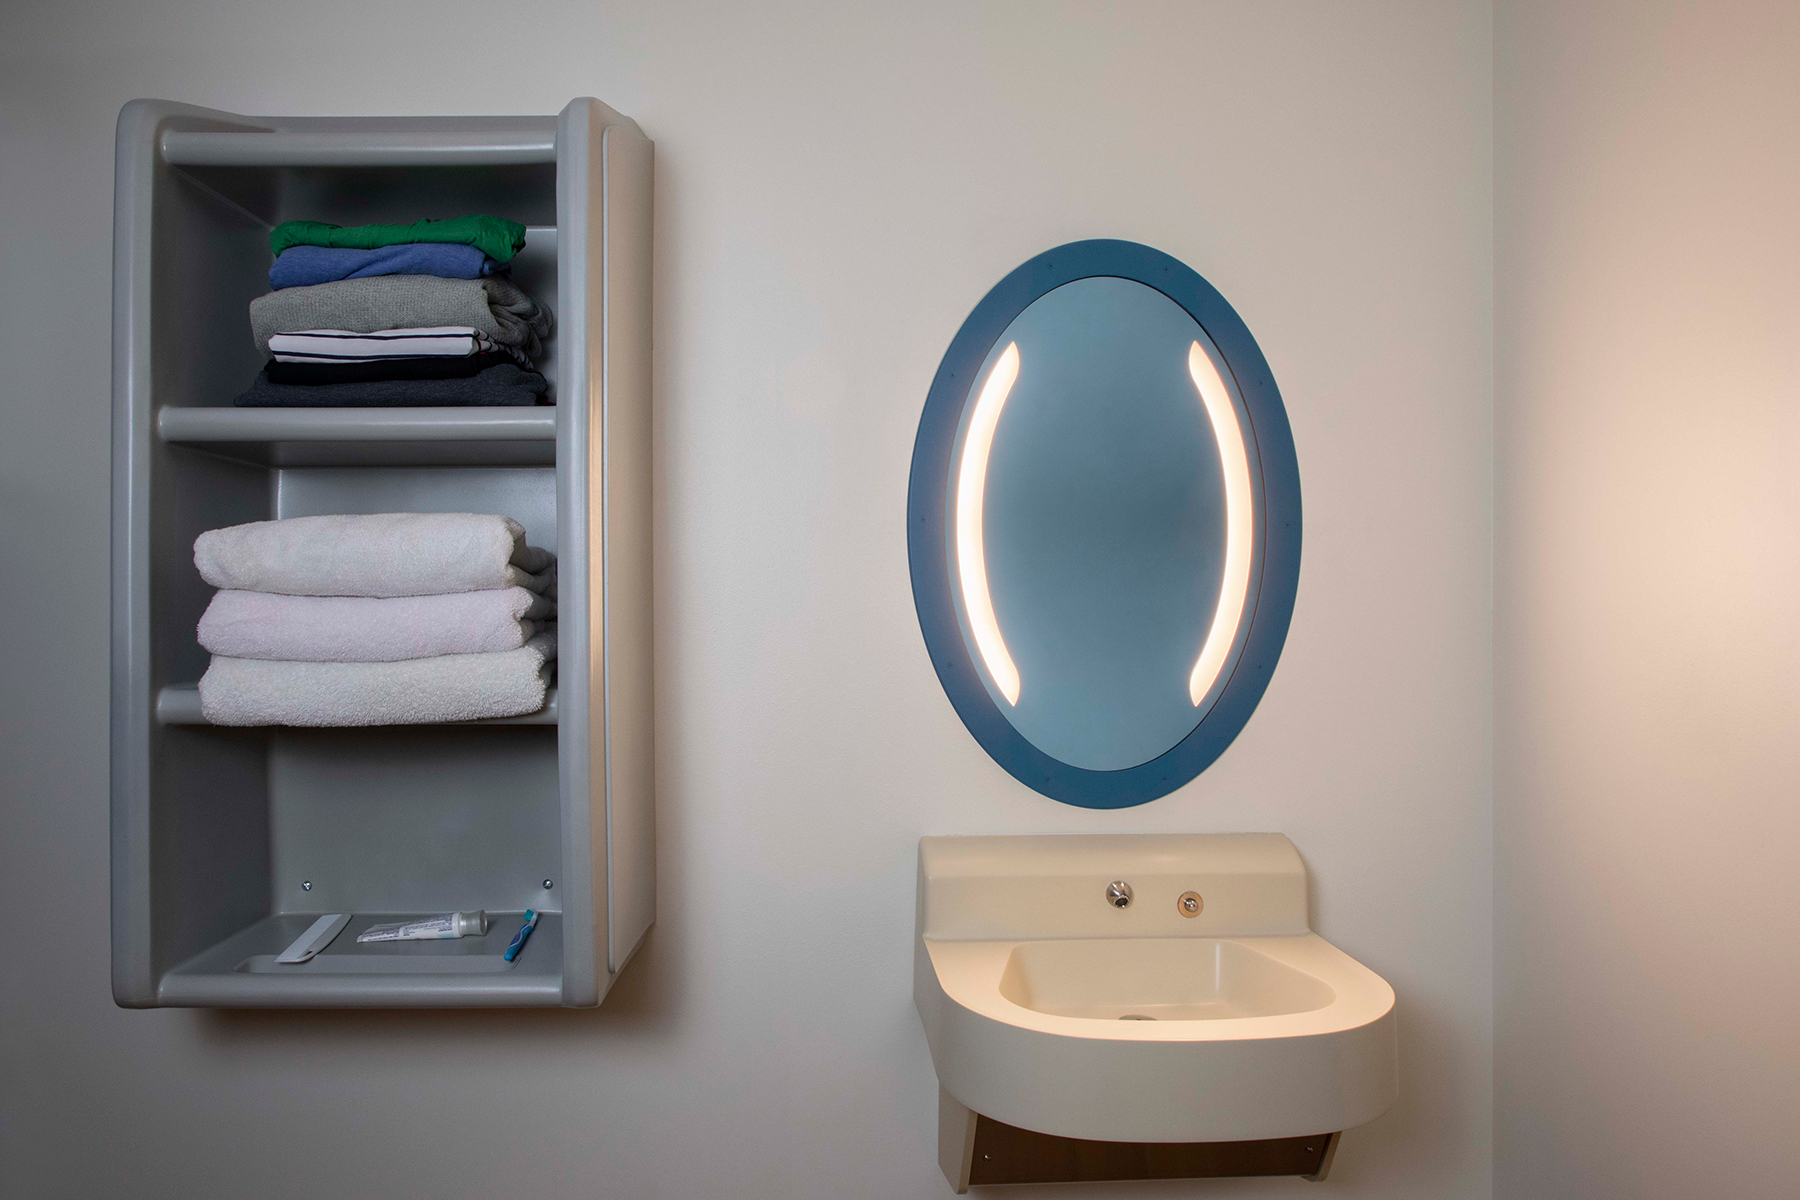 Sole oval illuminated mirror in a behavioral health bathroom